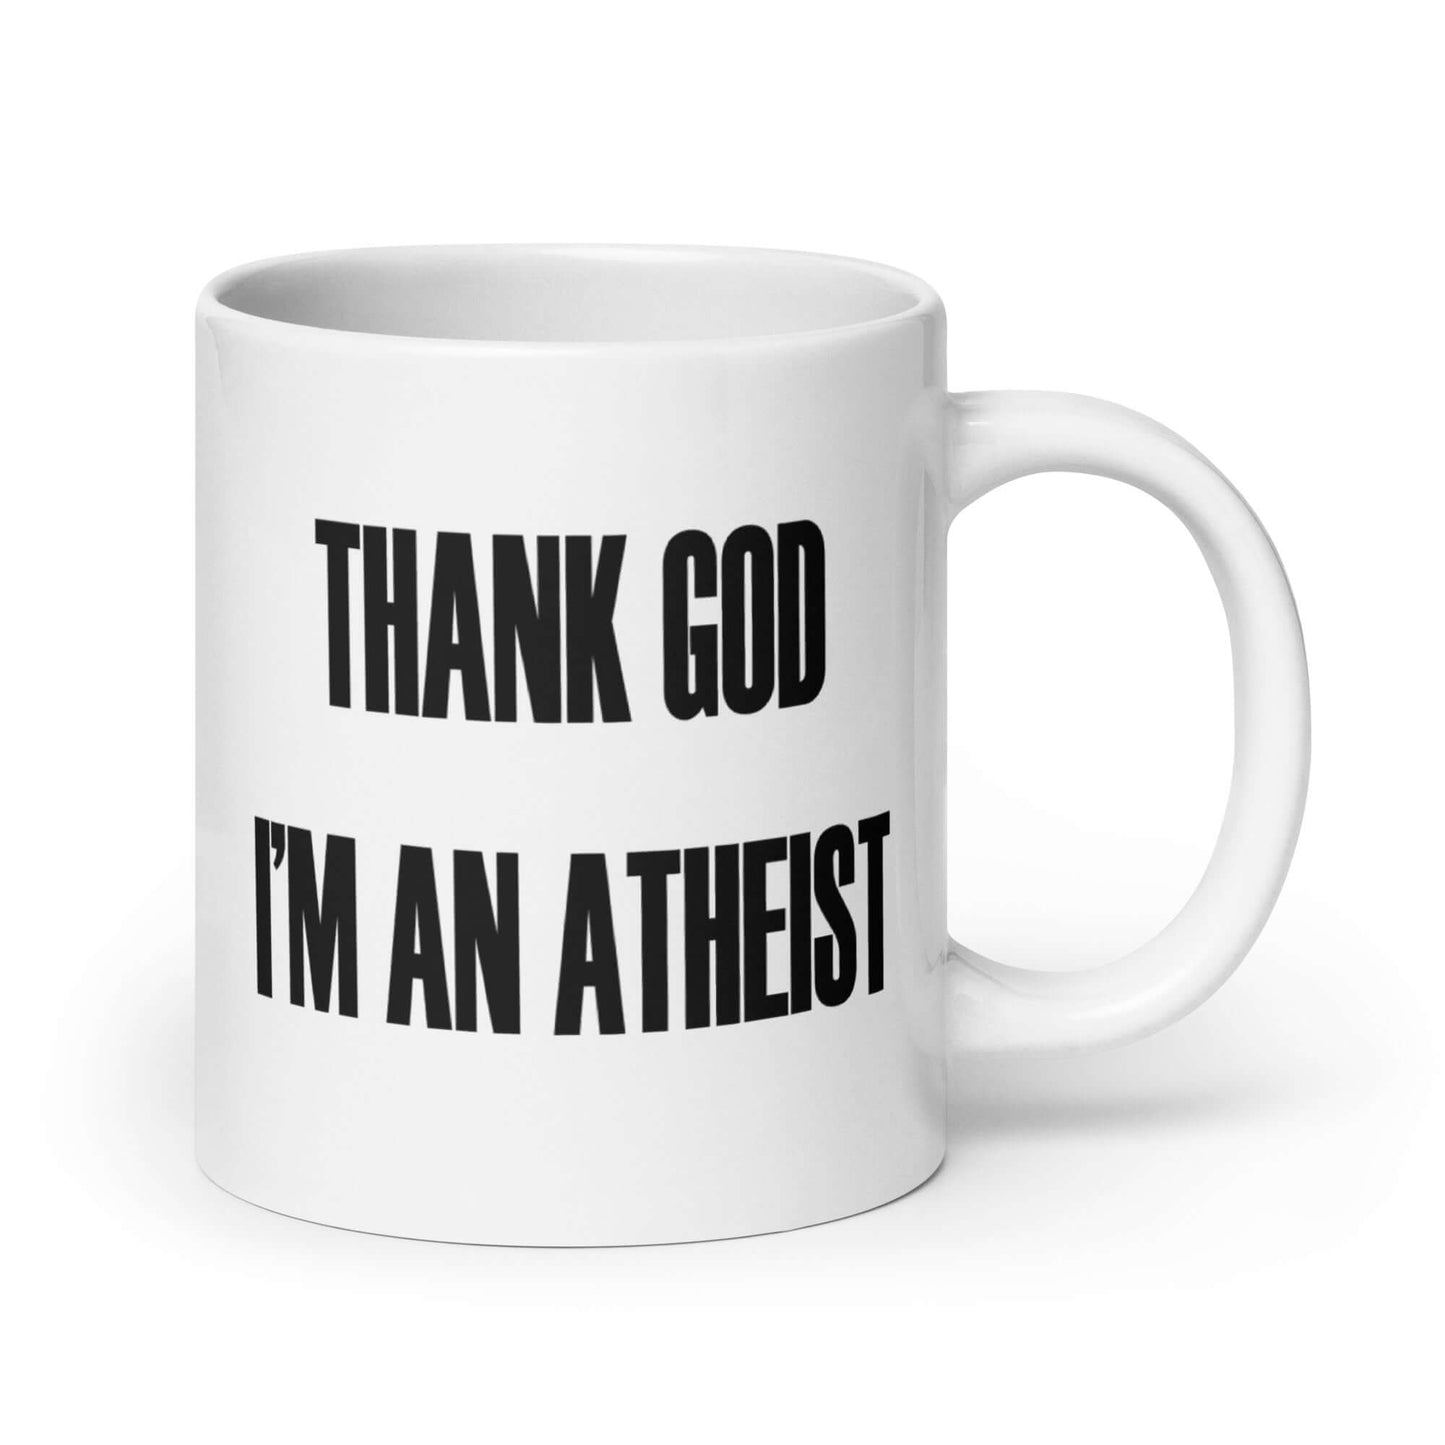 Thank god I'm an atheist ceramic mug